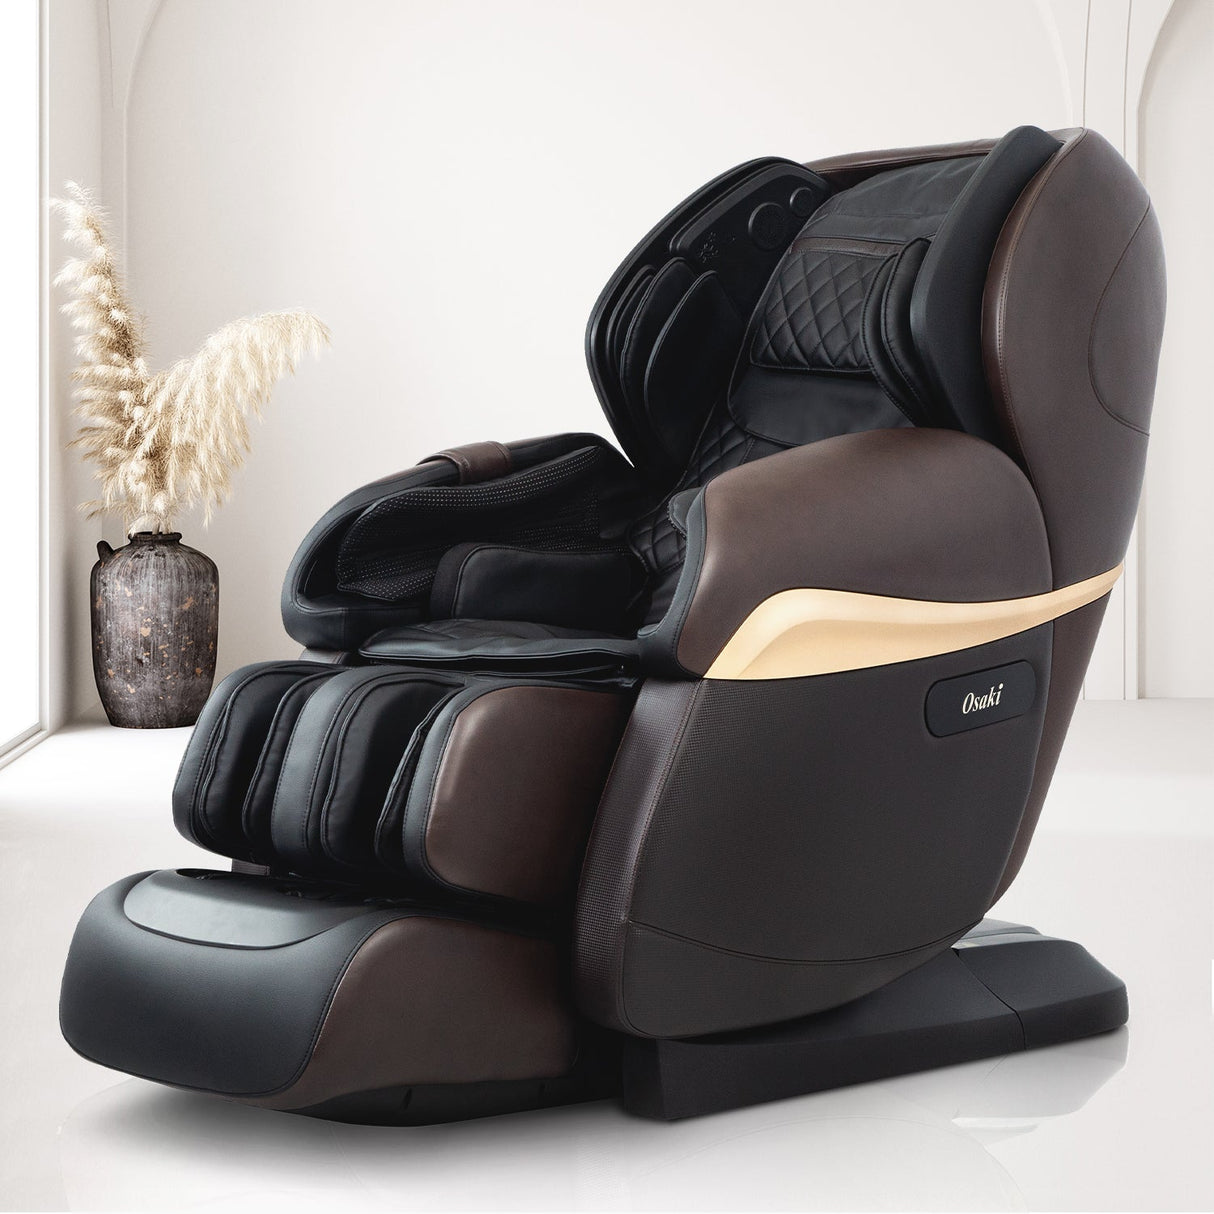 Osaki | Pro OS-4D Paragon Massage Chair